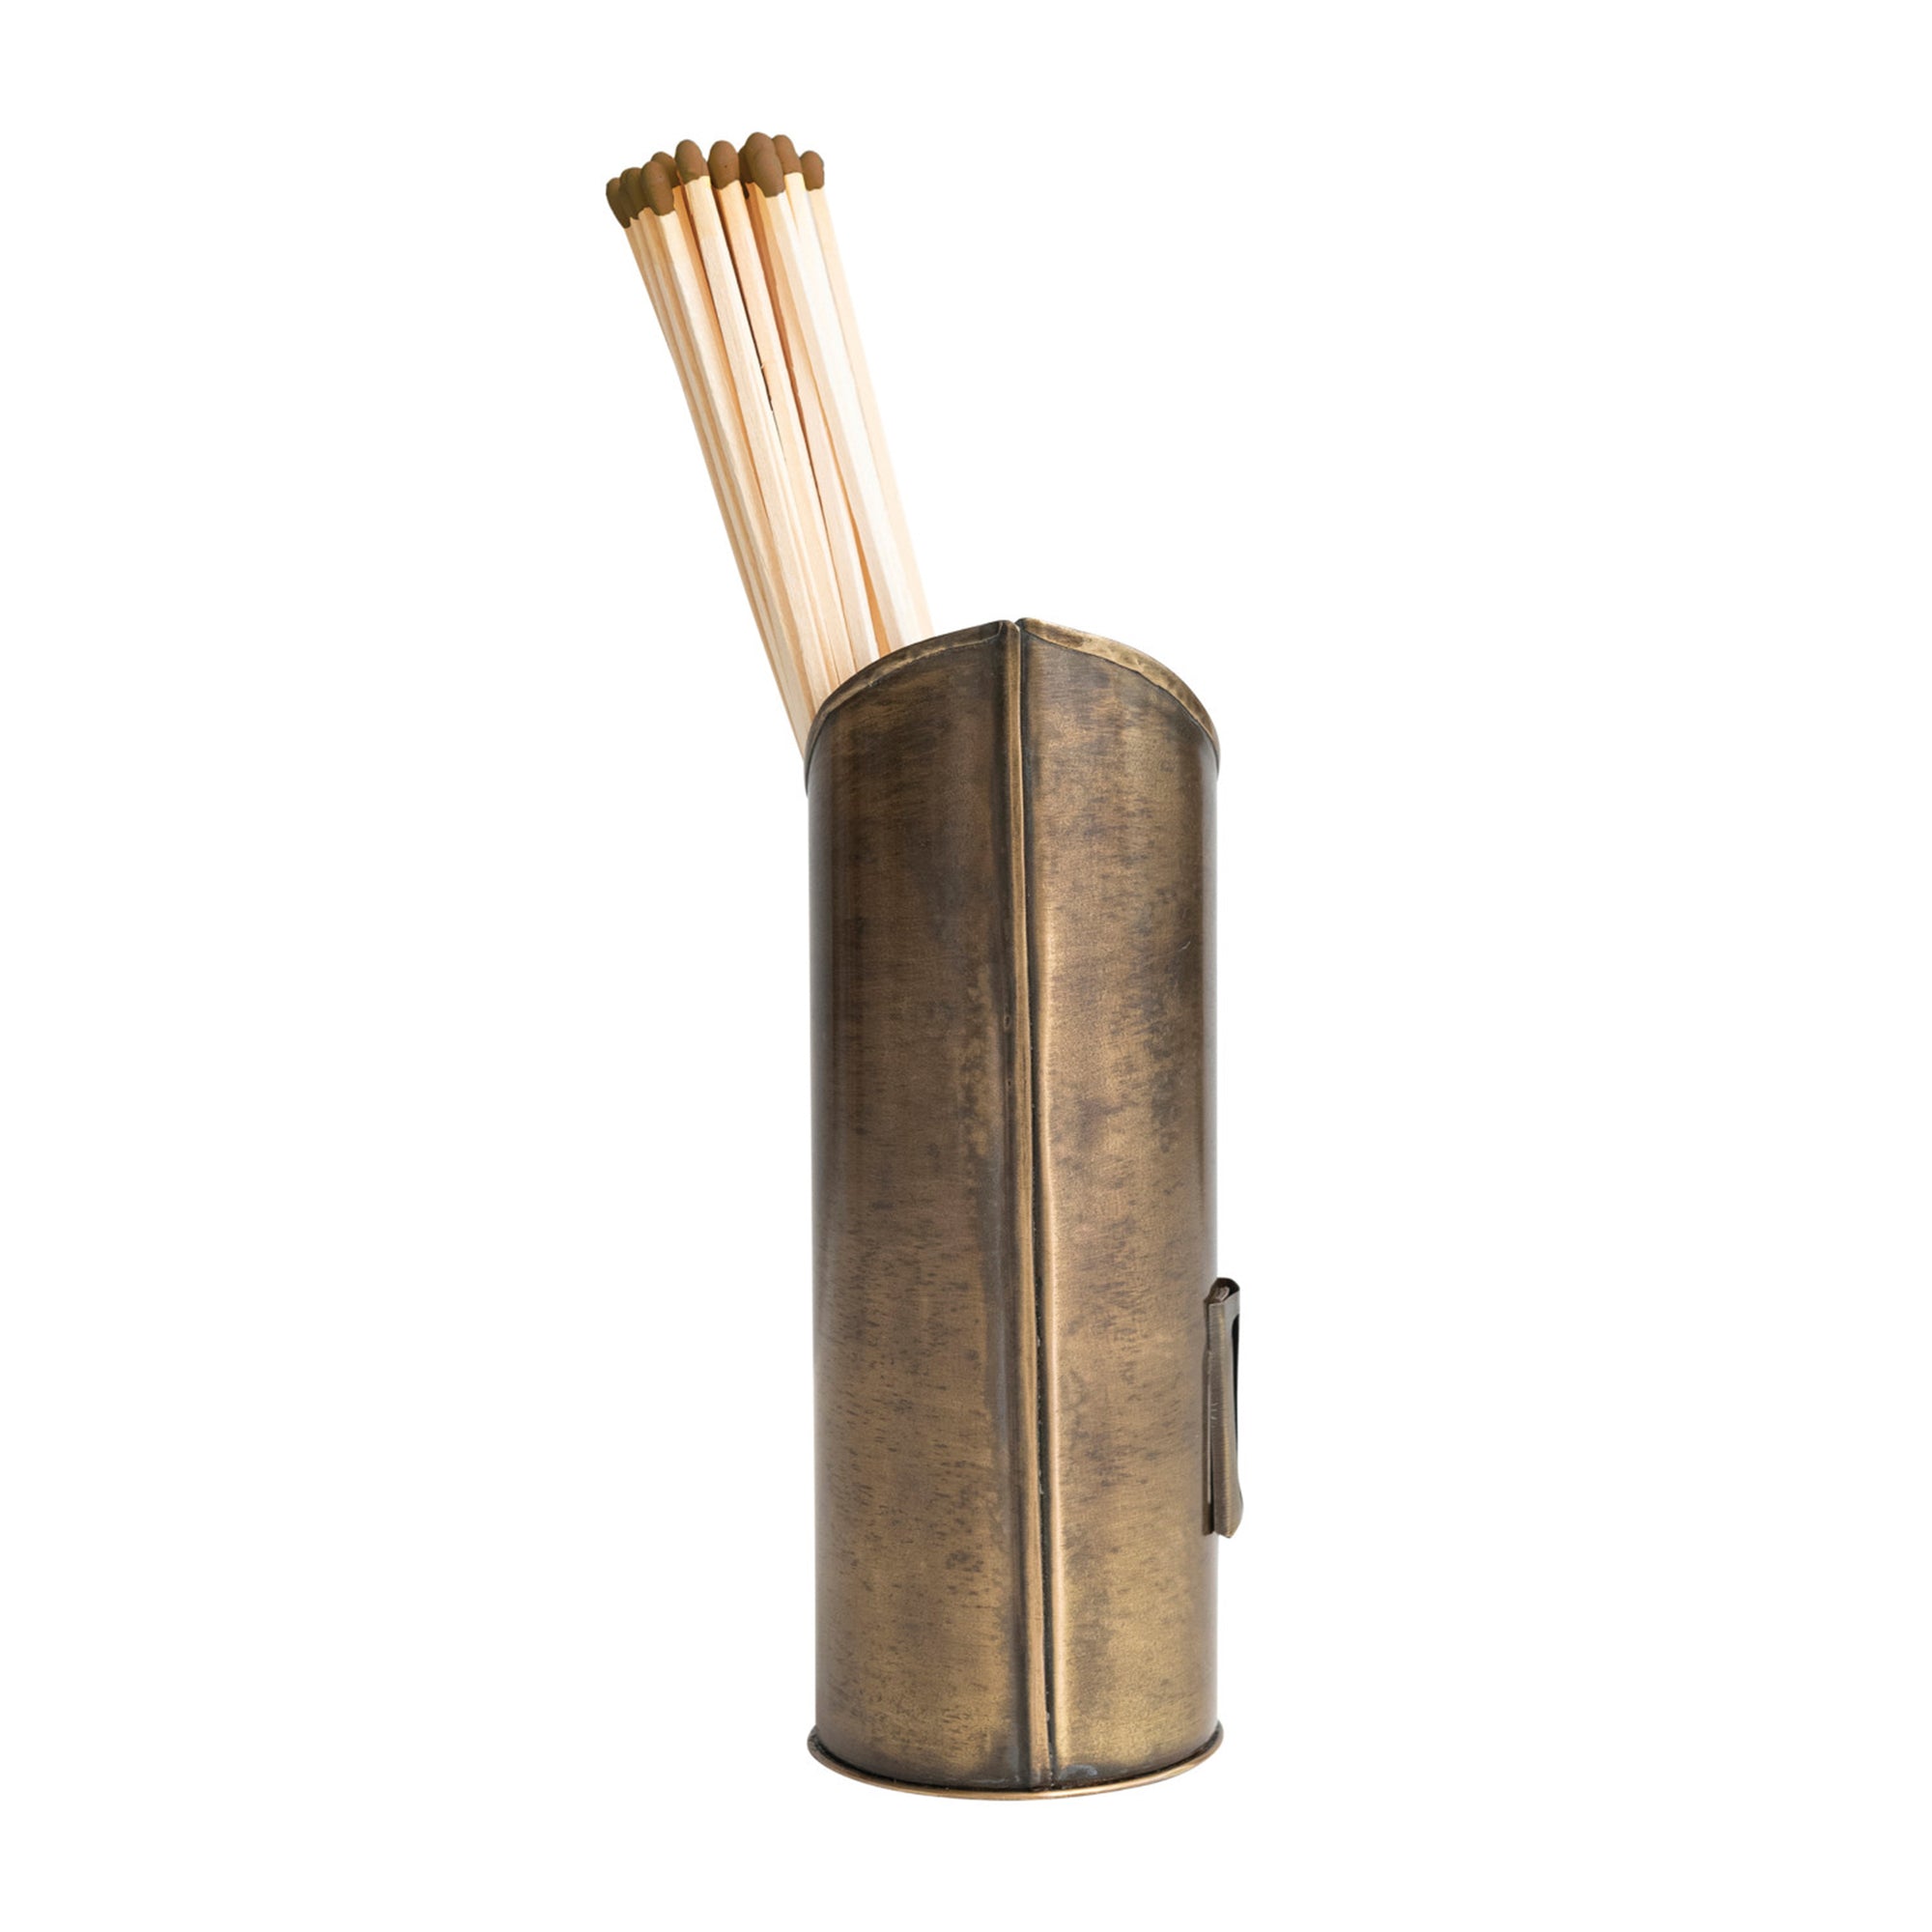 Antique Brass Matchstick Holder with Safety Matches